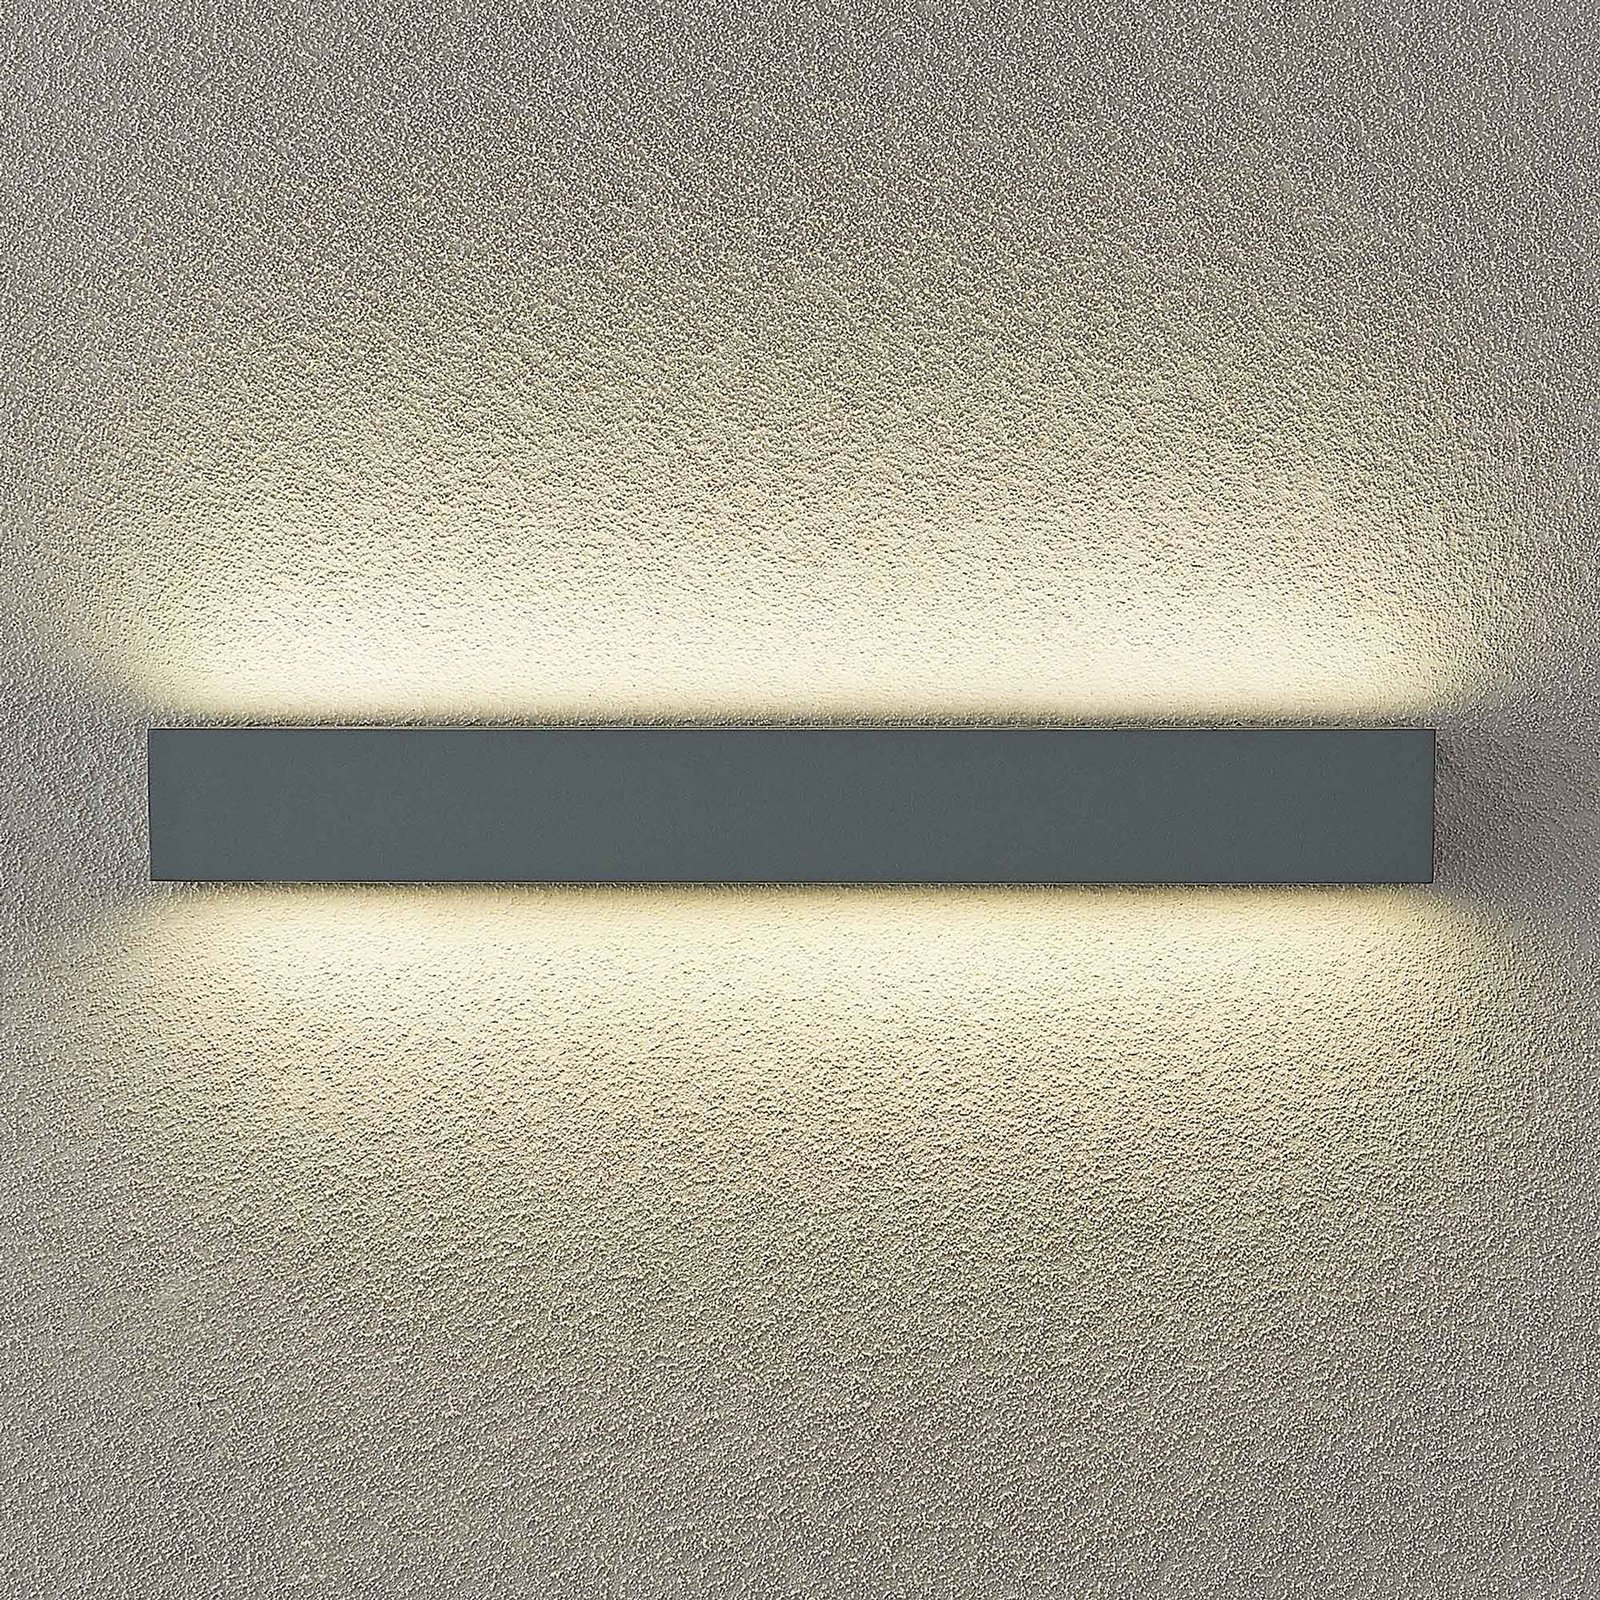 Arcchio Lengo LED-Wandlampe CCT, 50cm, 2-fl. grau